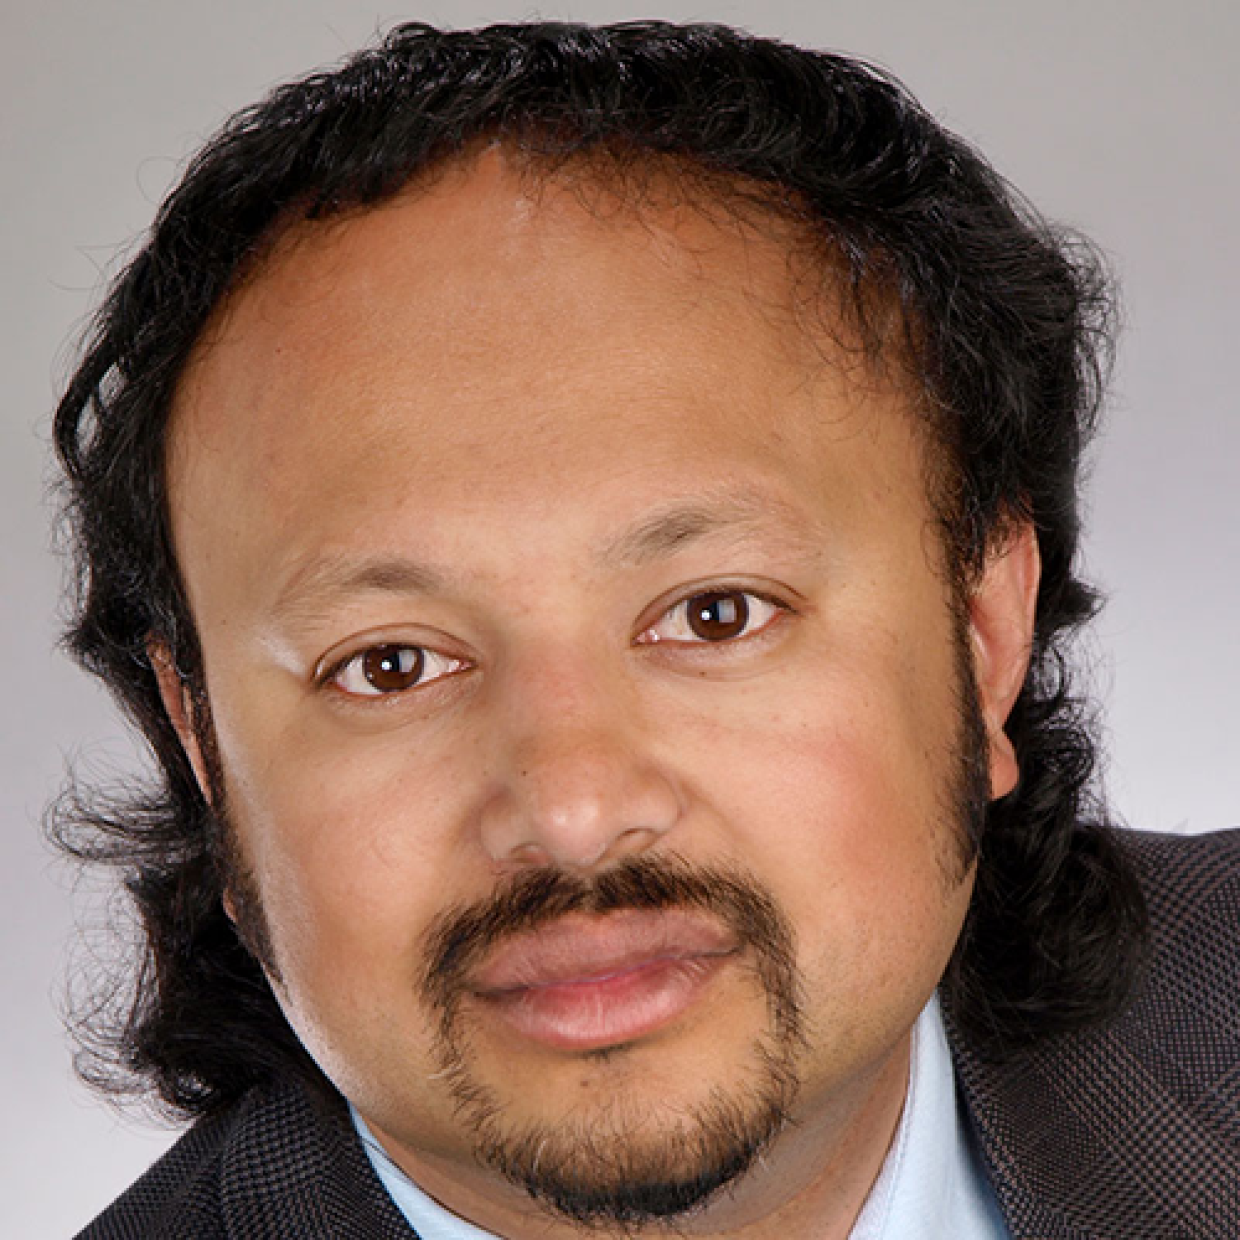 Anirban Basu, Chairman, CEO, Founder, Sage Policy Group